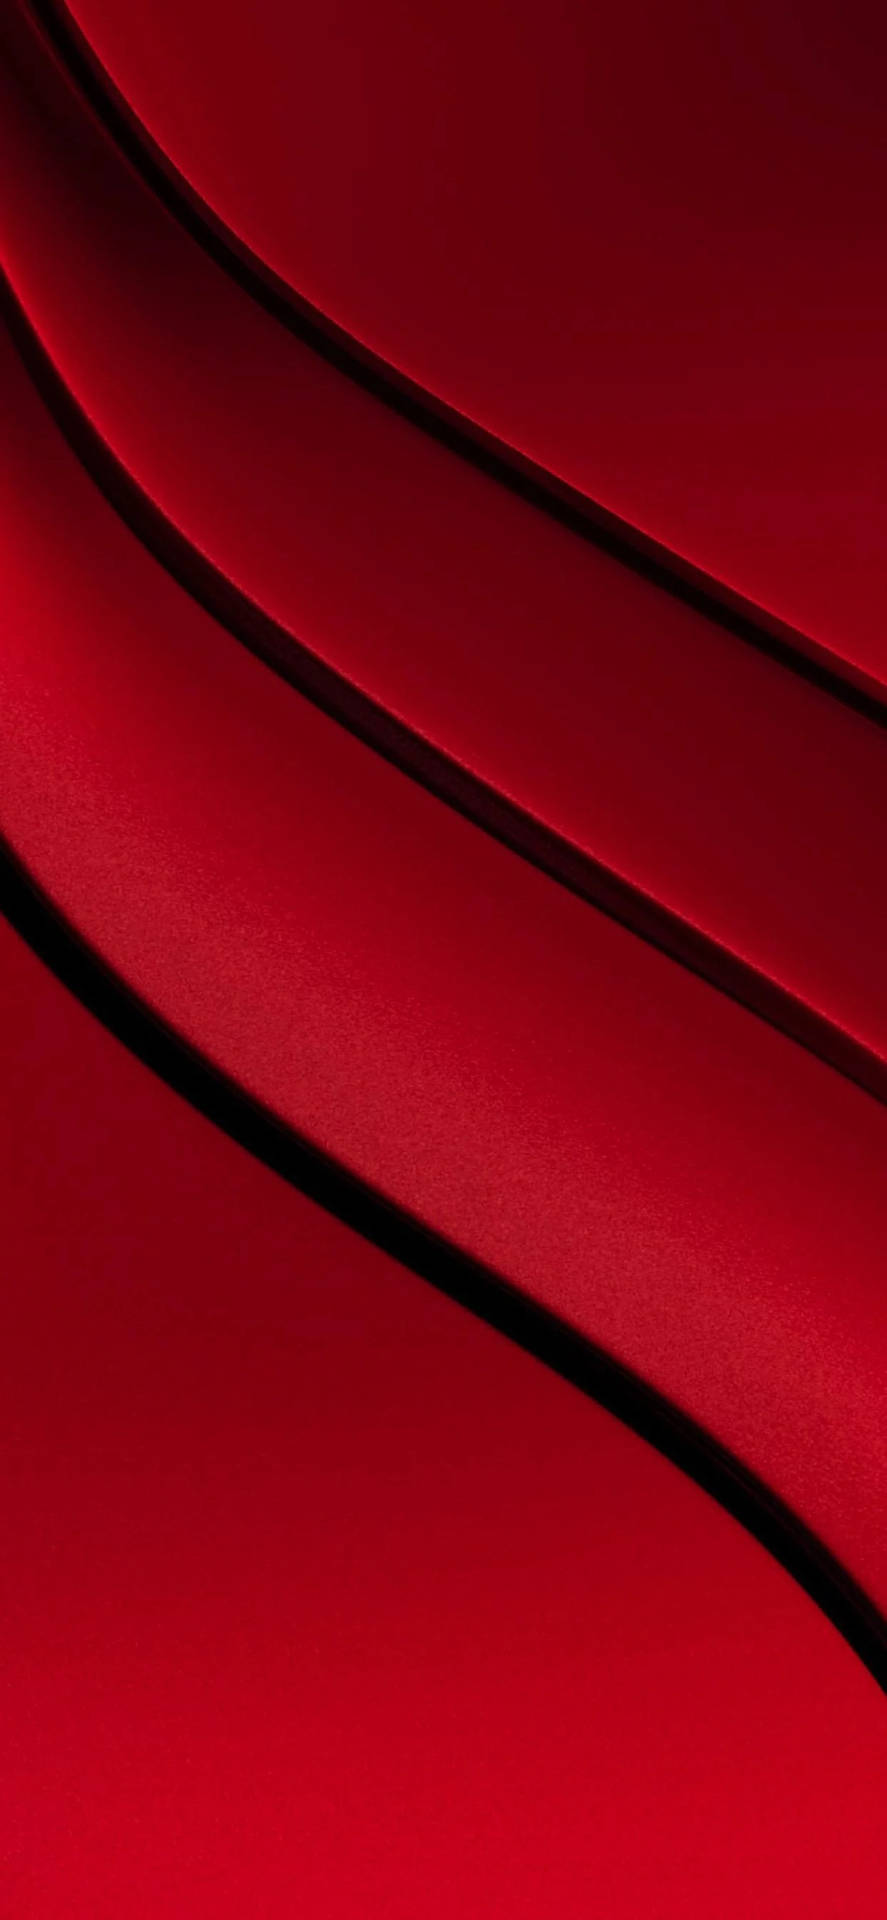 Metallic Red Iphone Wallpaper